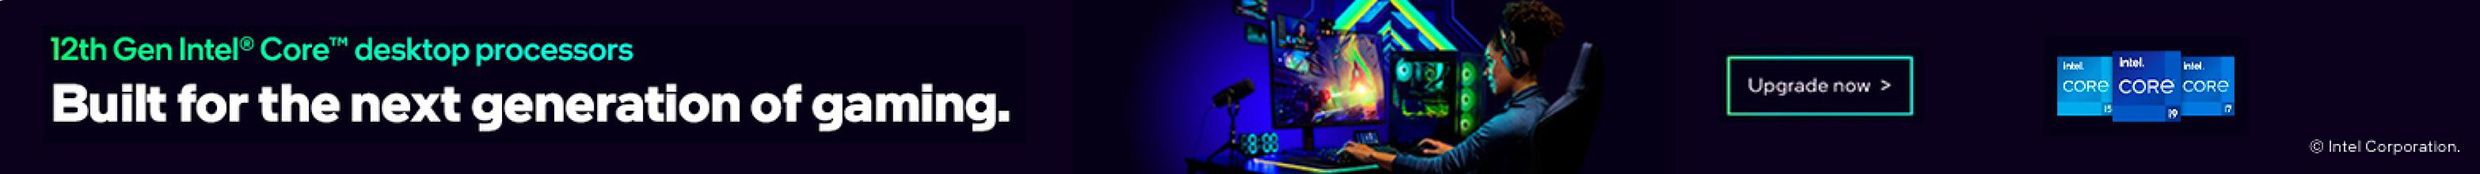 Gaming desktops powered by Intel 12th gen processors